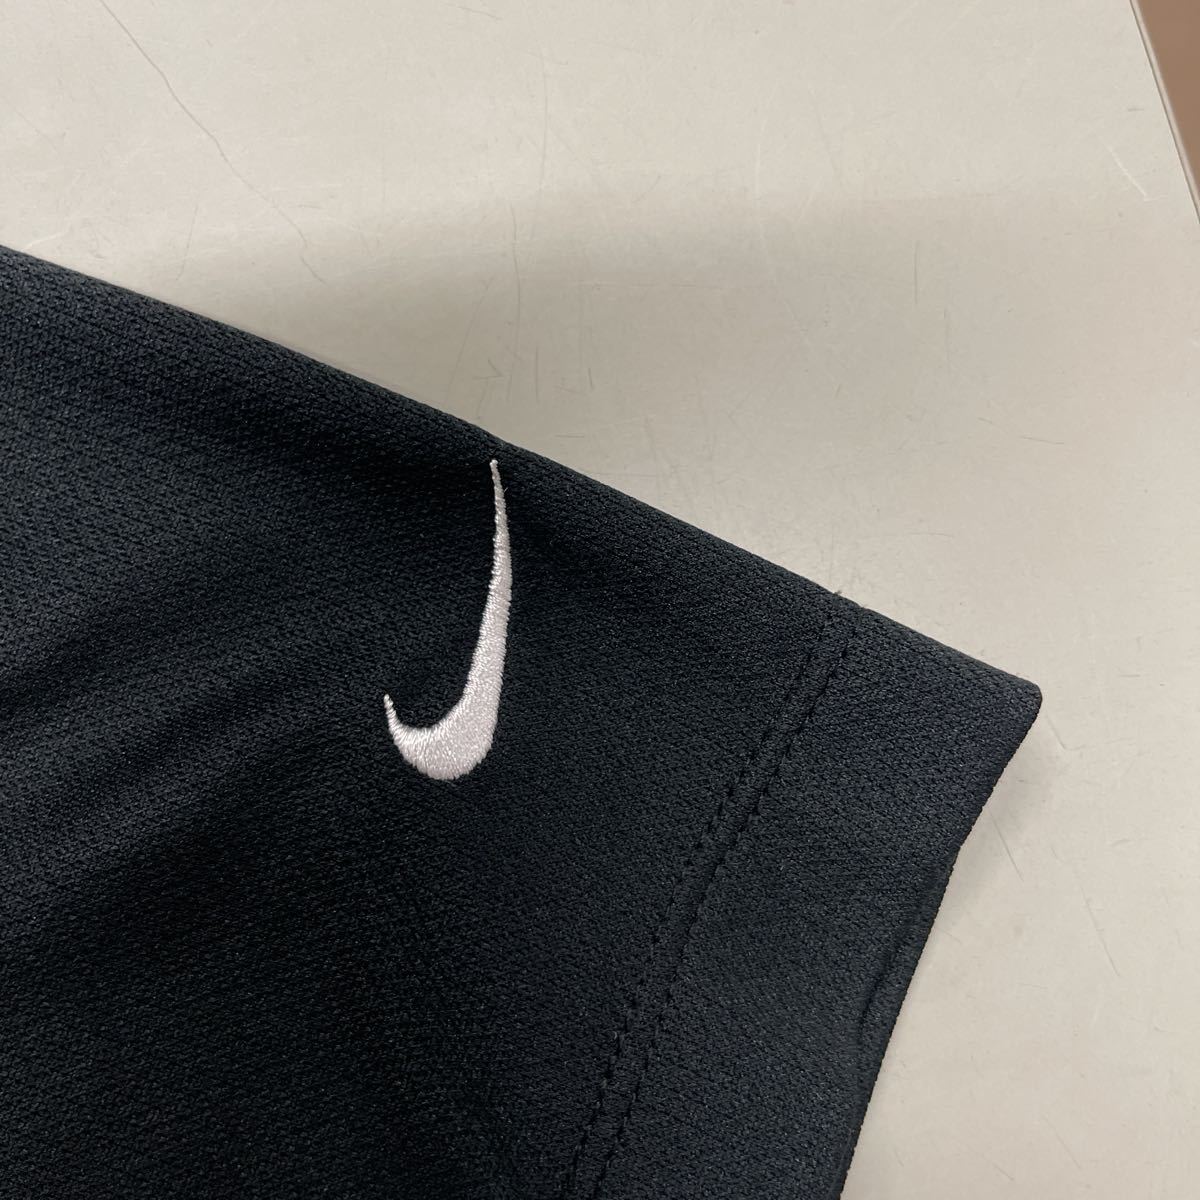 NIKE golf Nike Golf dry скорость .M размер черный чёрный DRI-FIT мужской рубашка с коротким рукавом DESERT STORAGE вышивка 